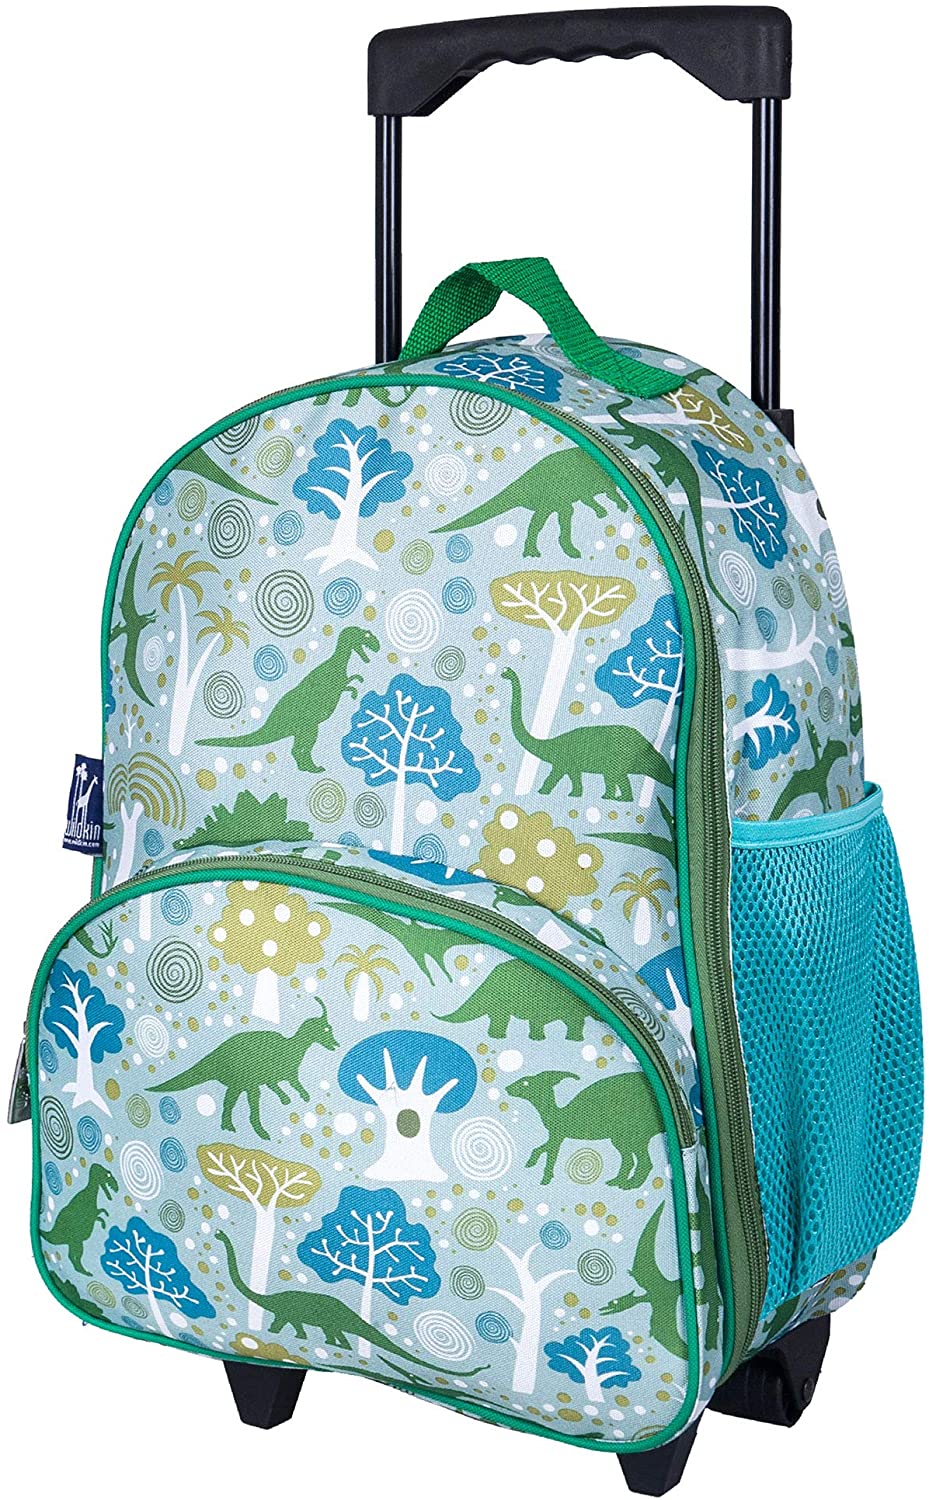 Wildkin BPA-Free Rolling School & Overnight Travel Kids Luggage